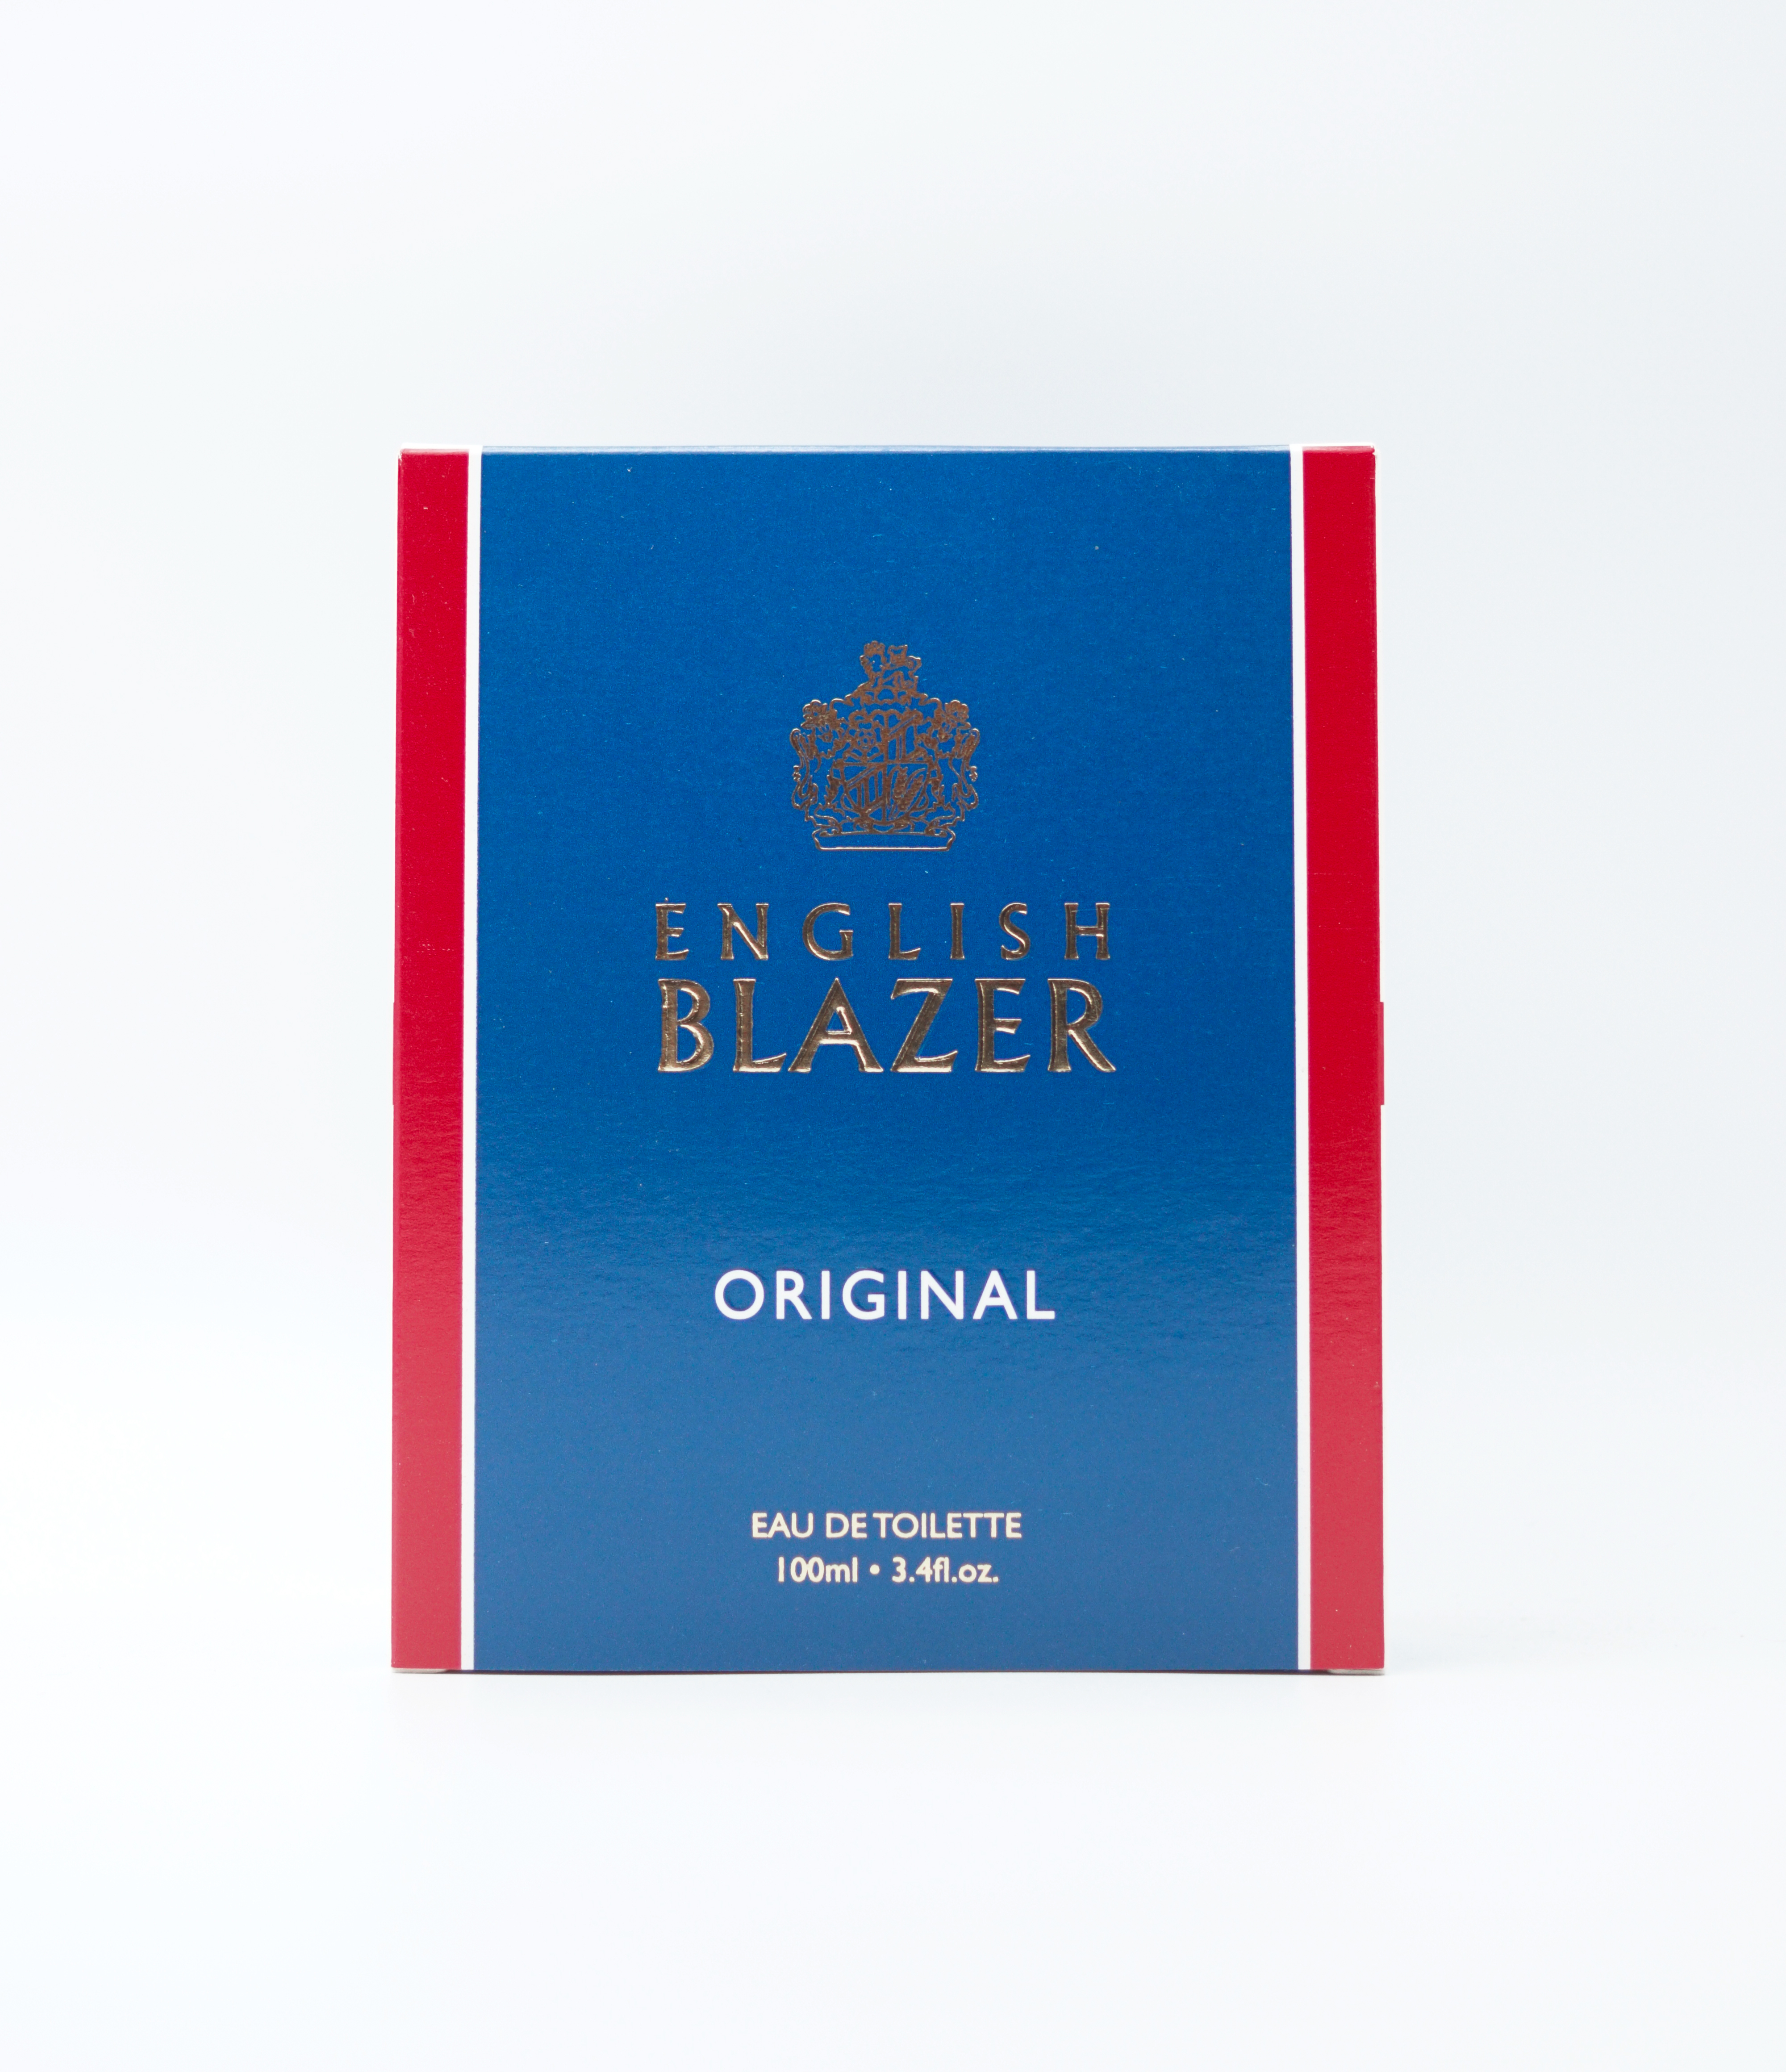 English Blazer Original 100 ml Eau de Toilette Perfume SKU 96853